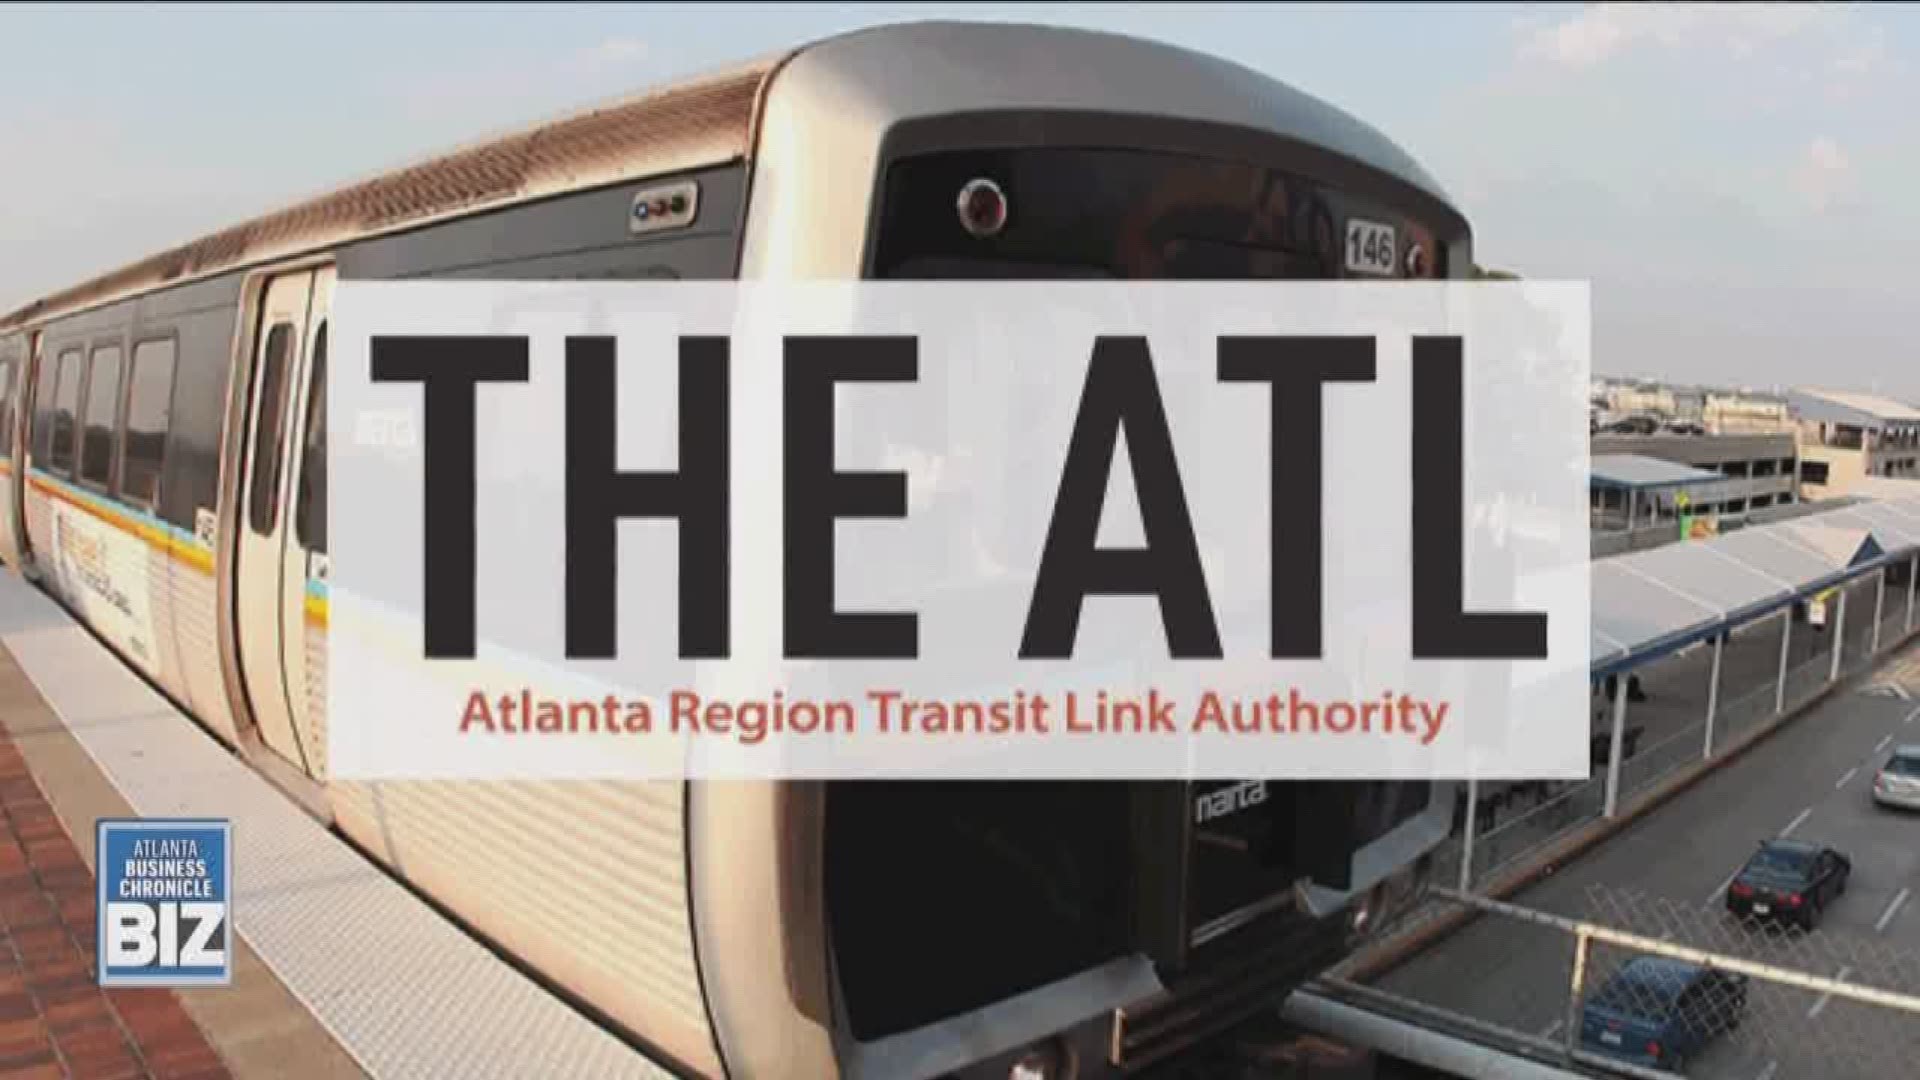 ATLtransit Interim Executive Director Chris Tomlinson responds to transit Q's on 'Atlanta Business Chronicle's BIZ'